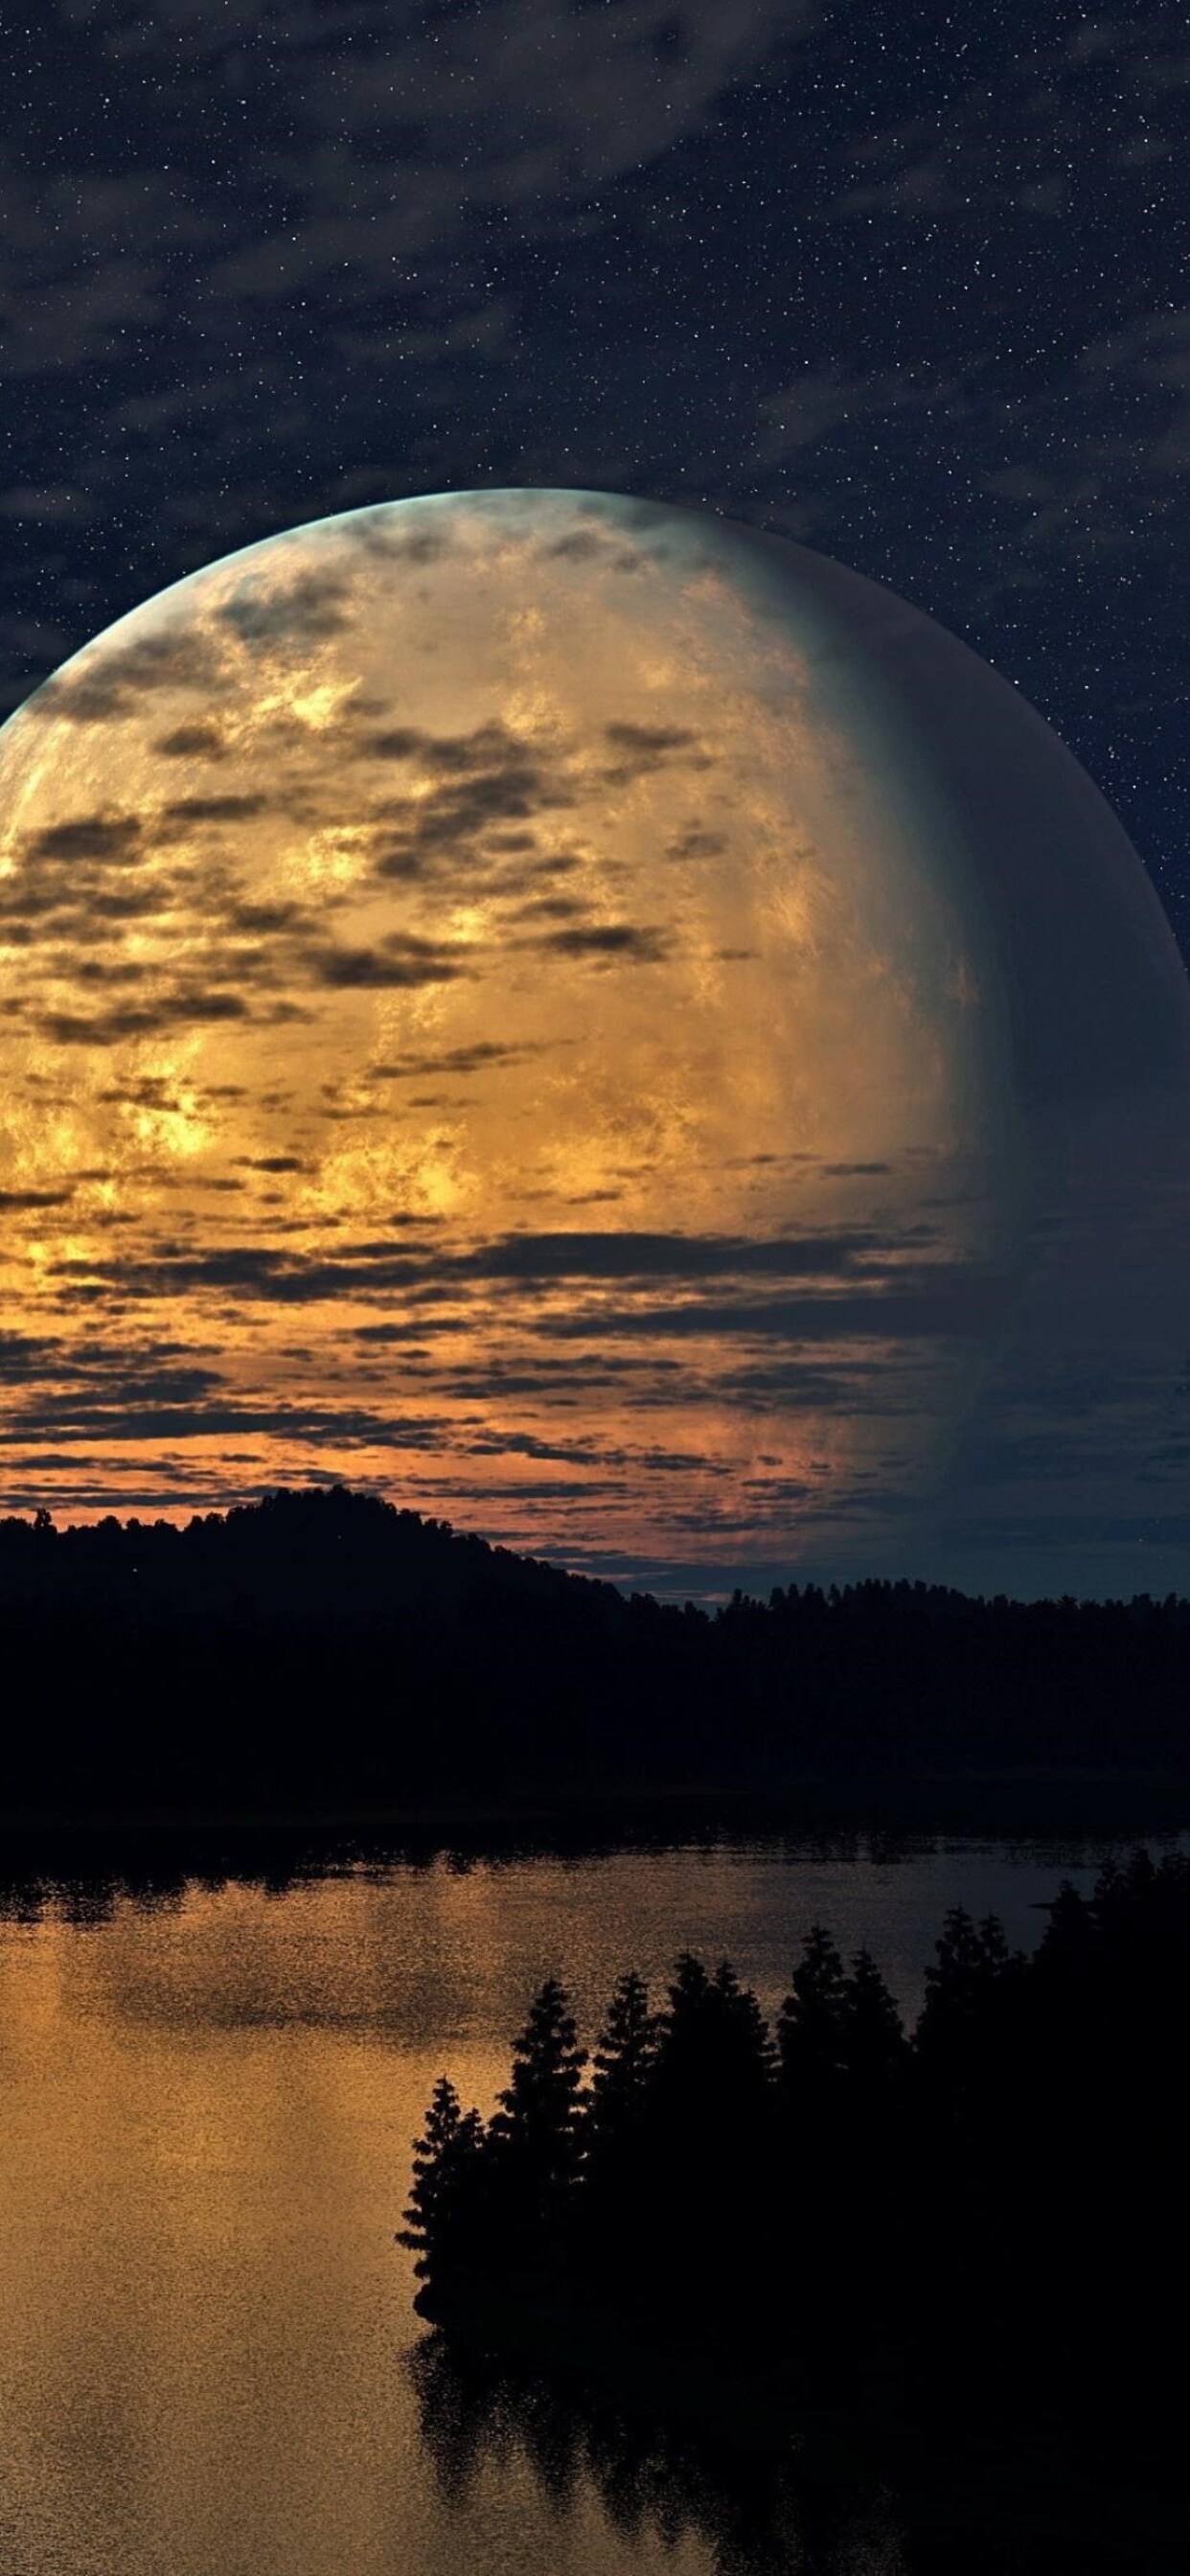 night-sky-moon-river-reflection.jpg